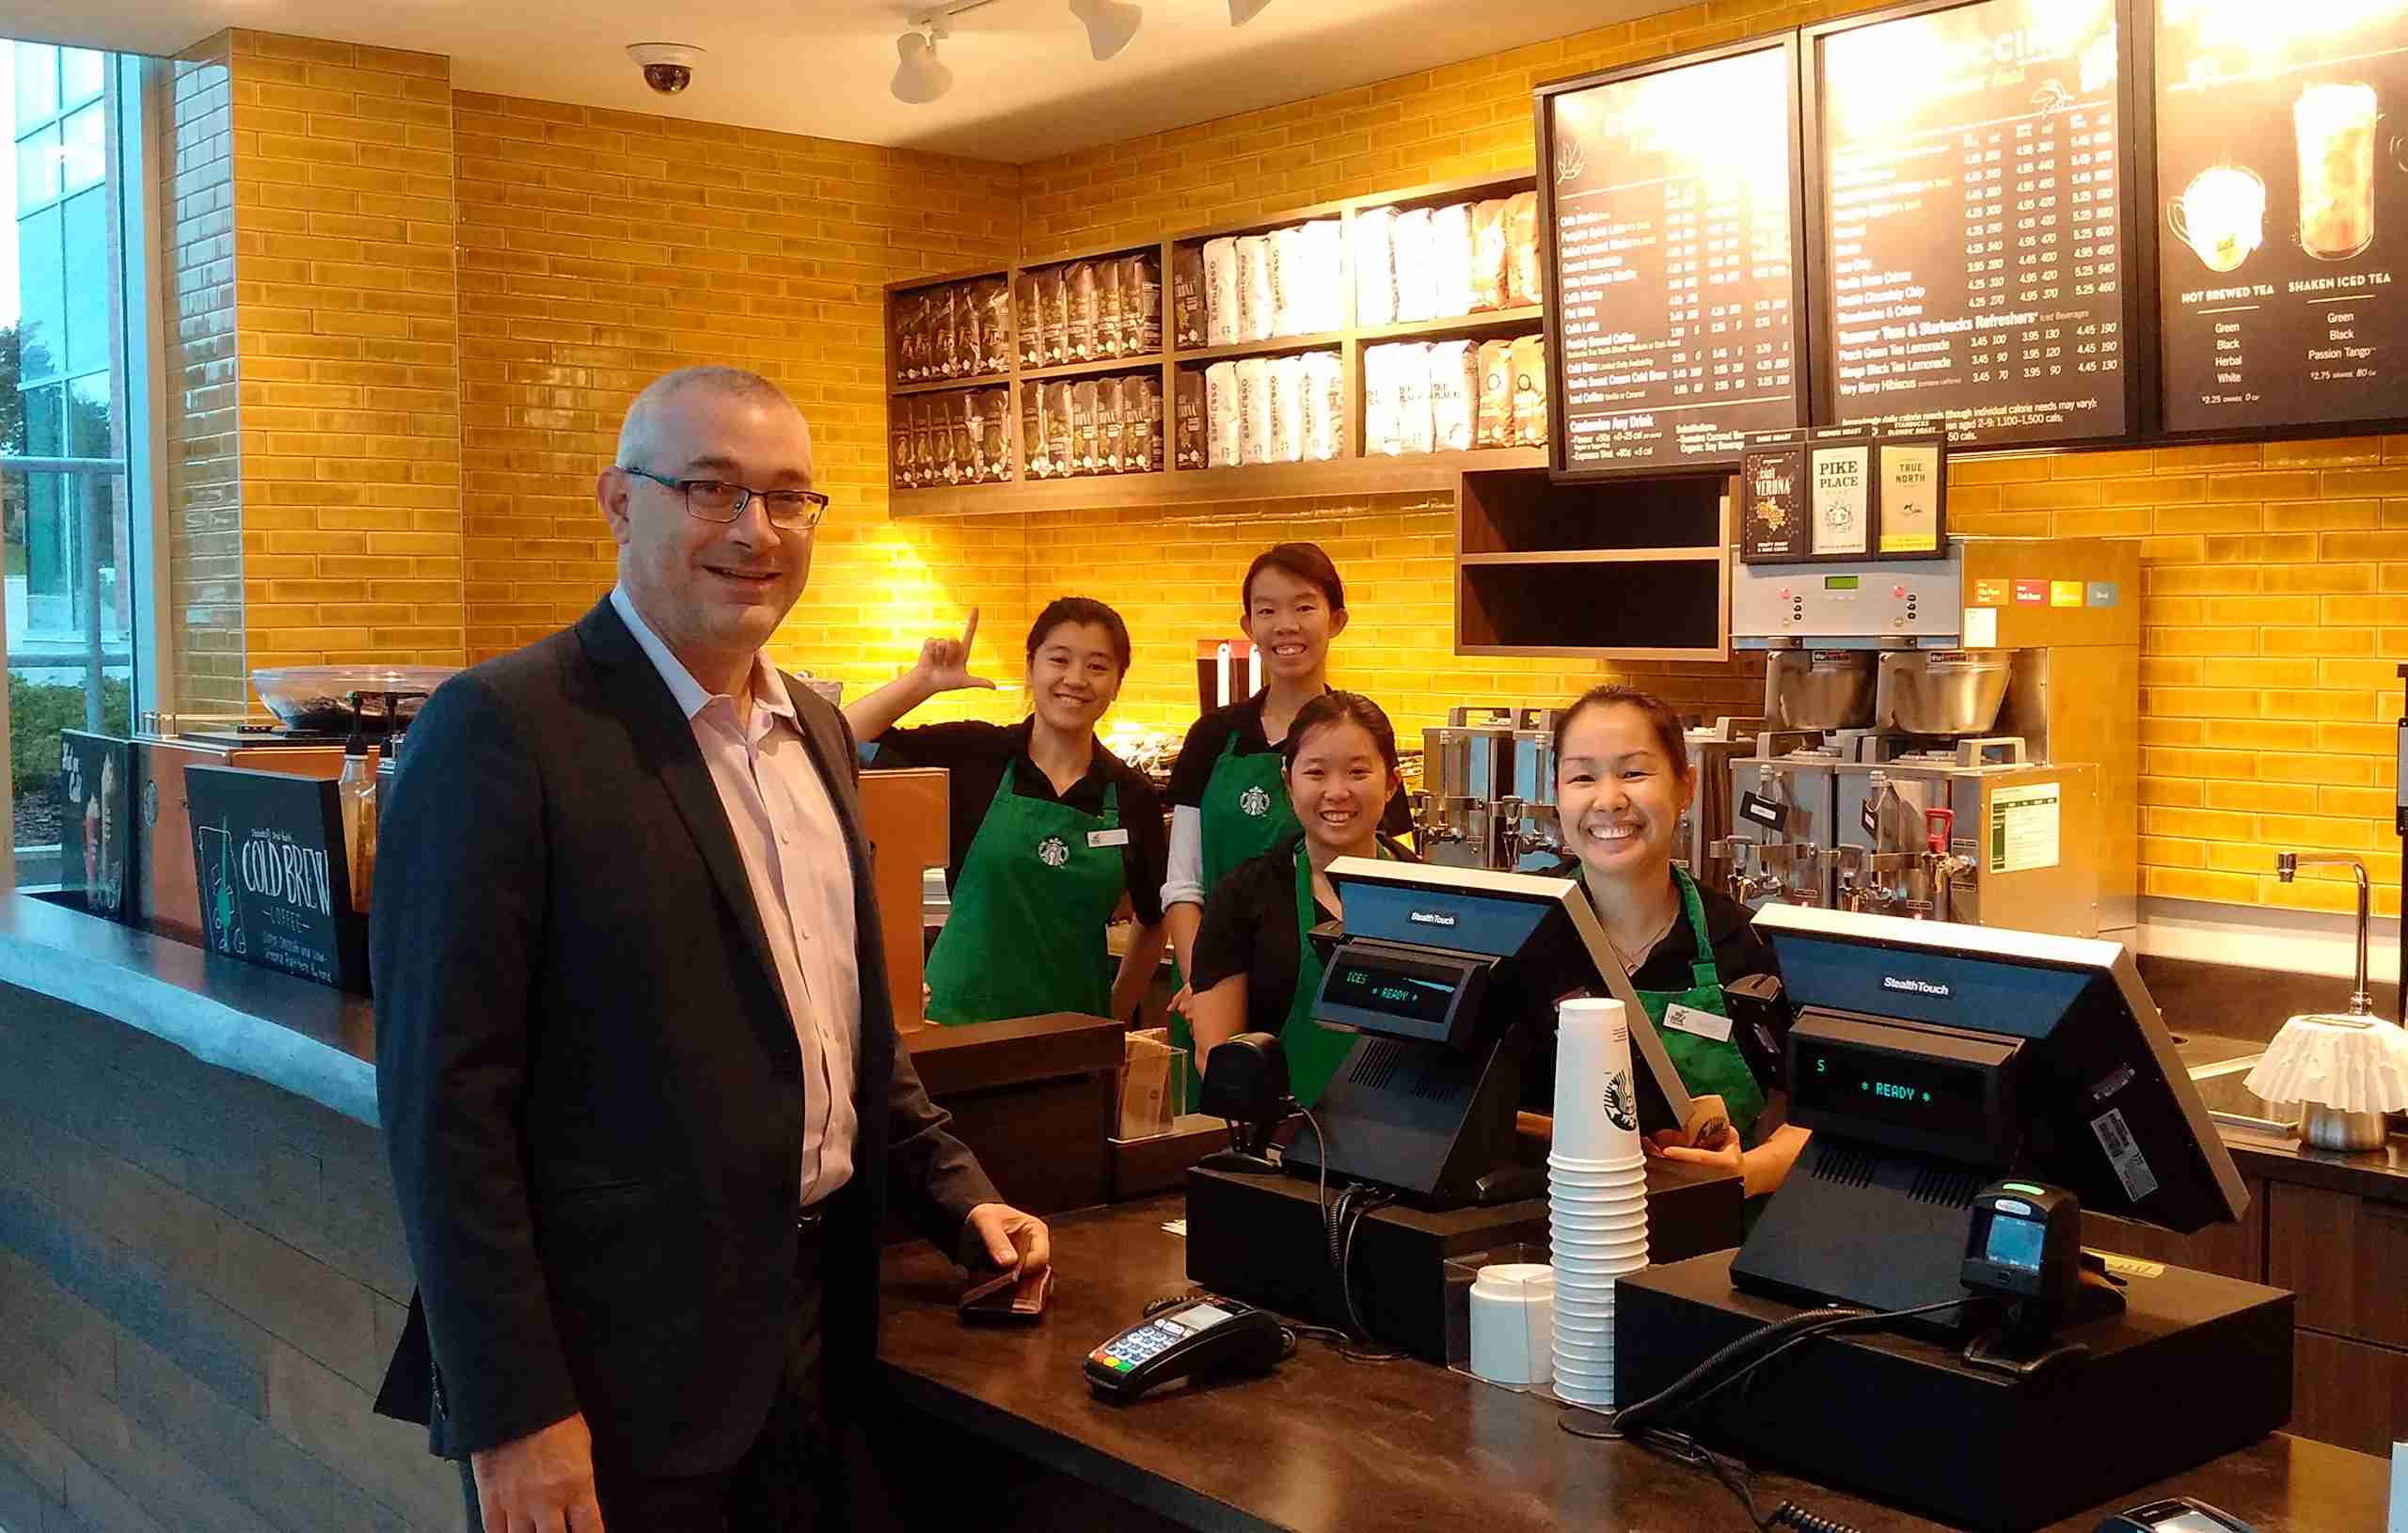 Dean James Rush with Starbucks staff.